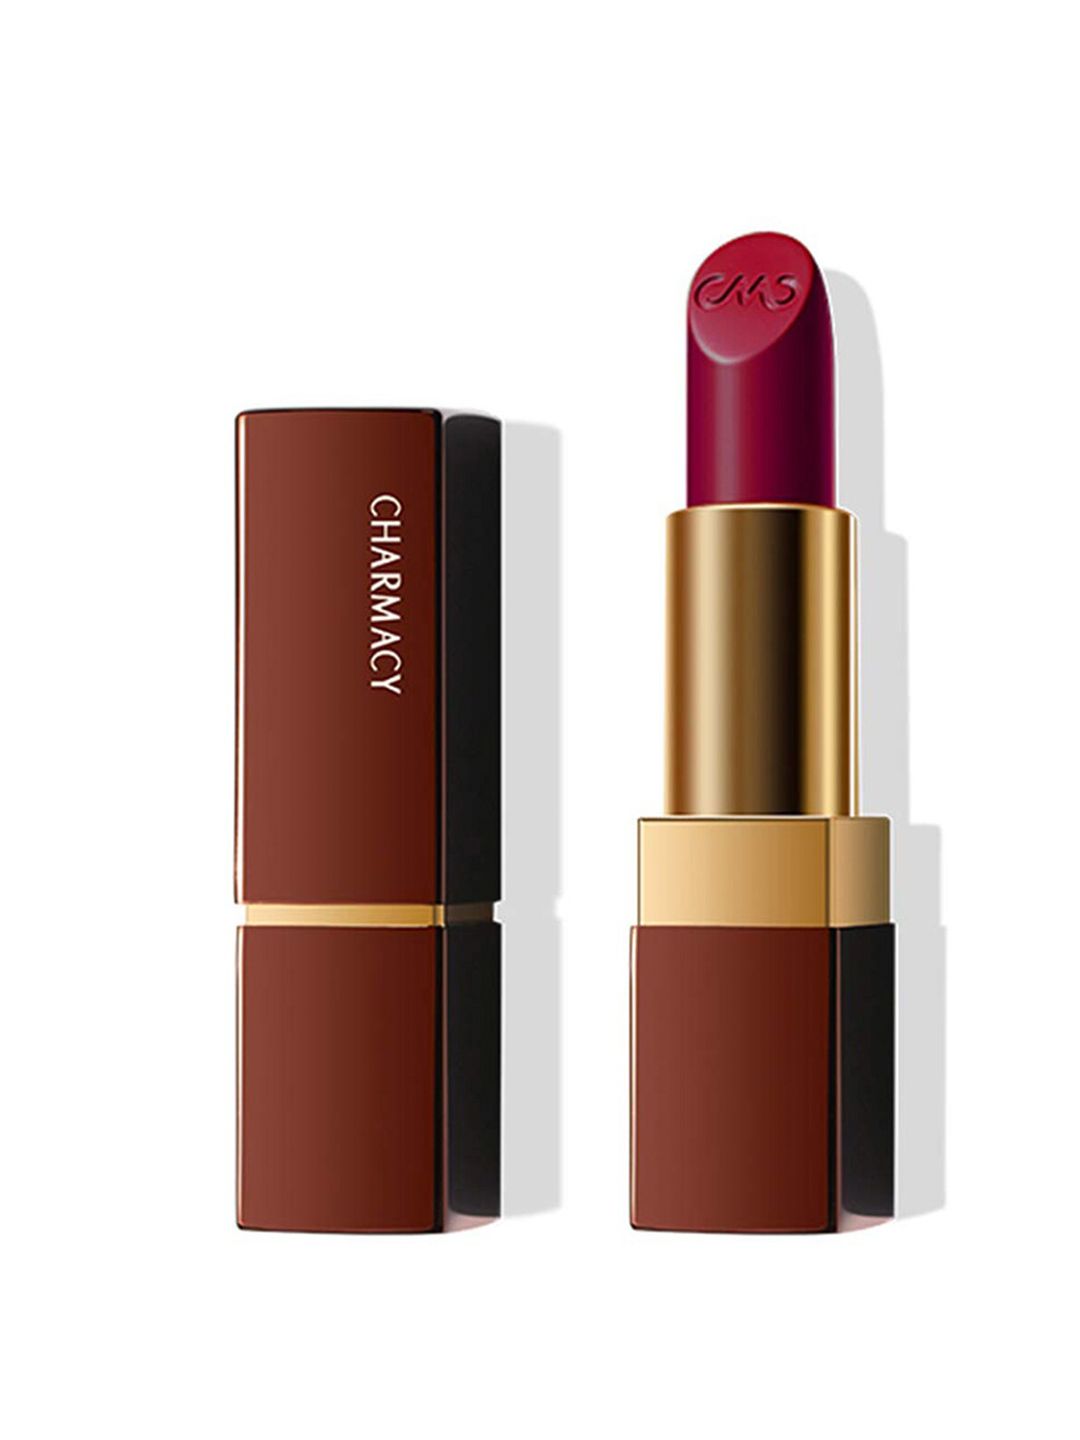 Charmacy Milano Luxe Creme Lipstick - Plum 13 Price in India